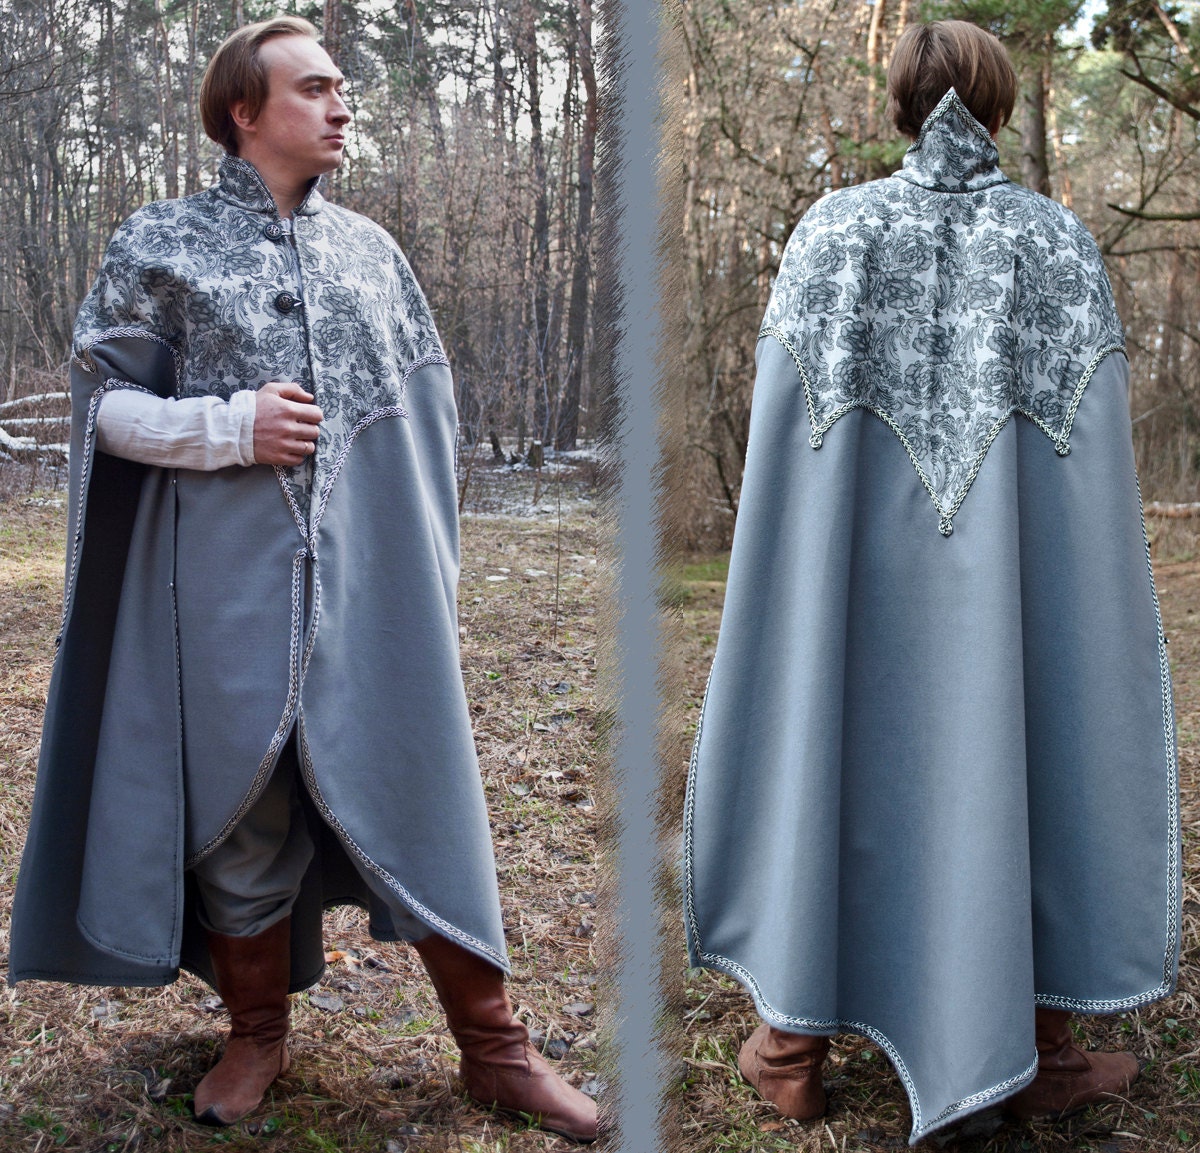 mantle medieval clothing